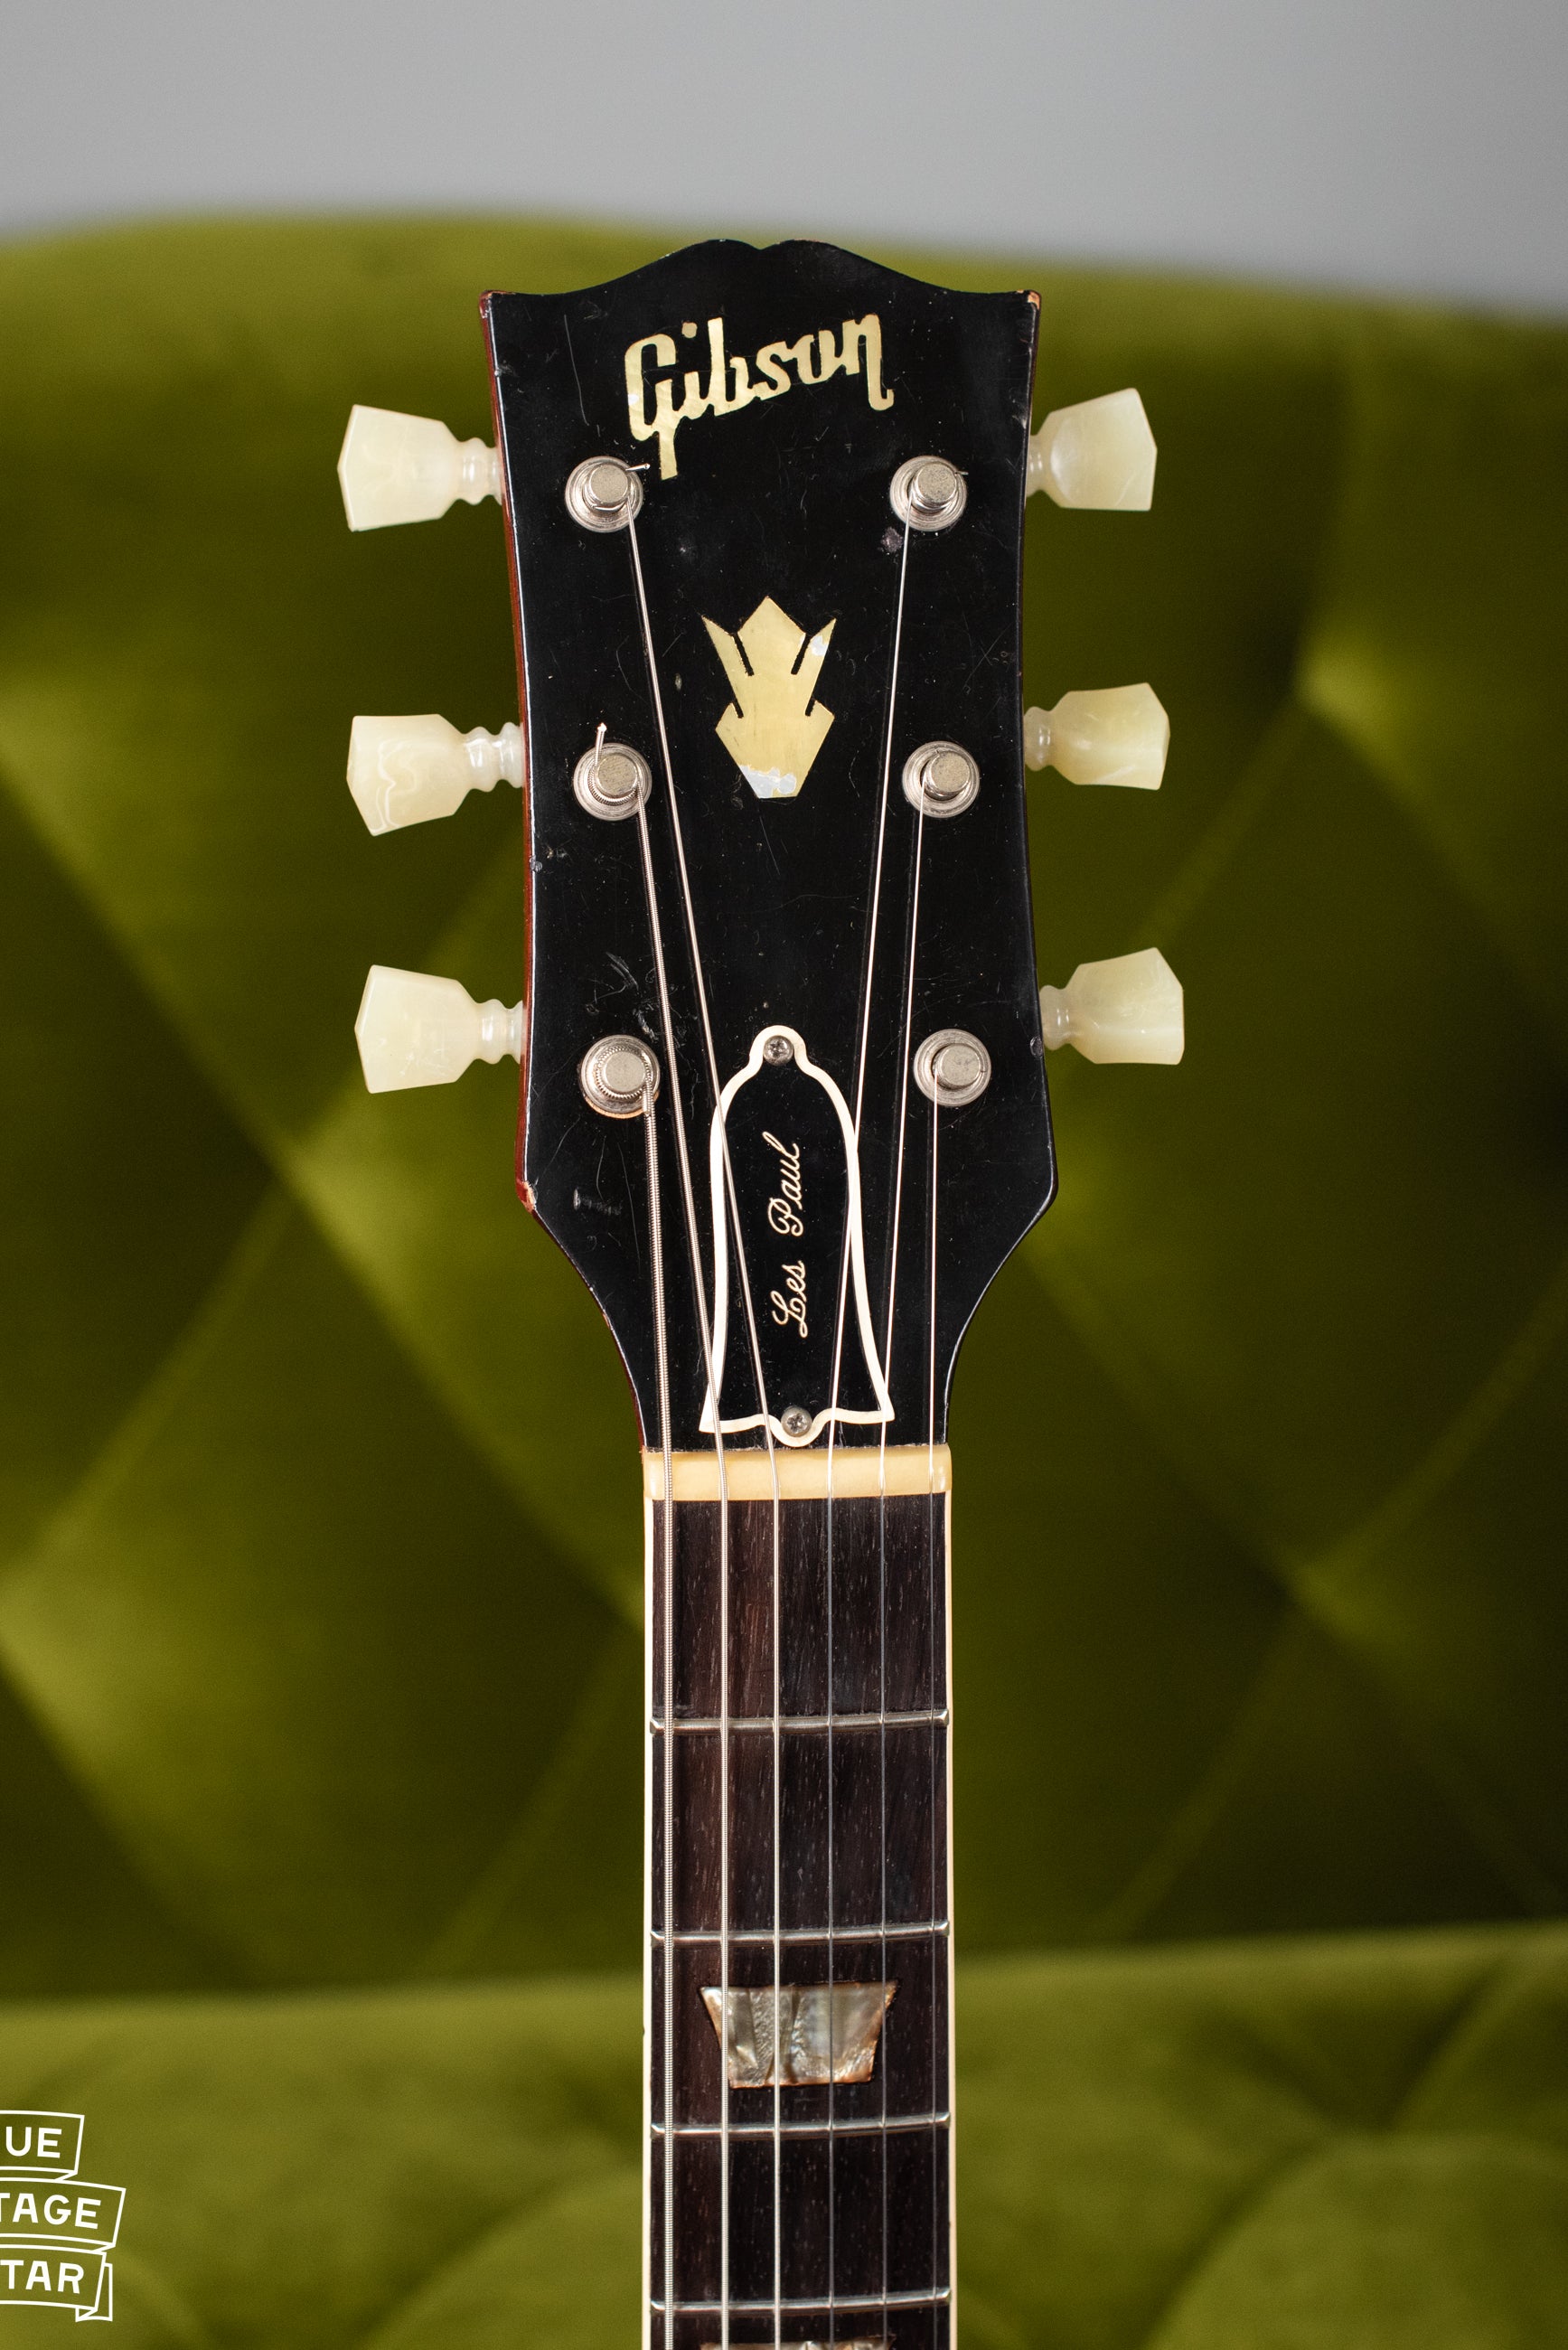 1961 Gibson Les Paul Standard headstock, truss rod cover